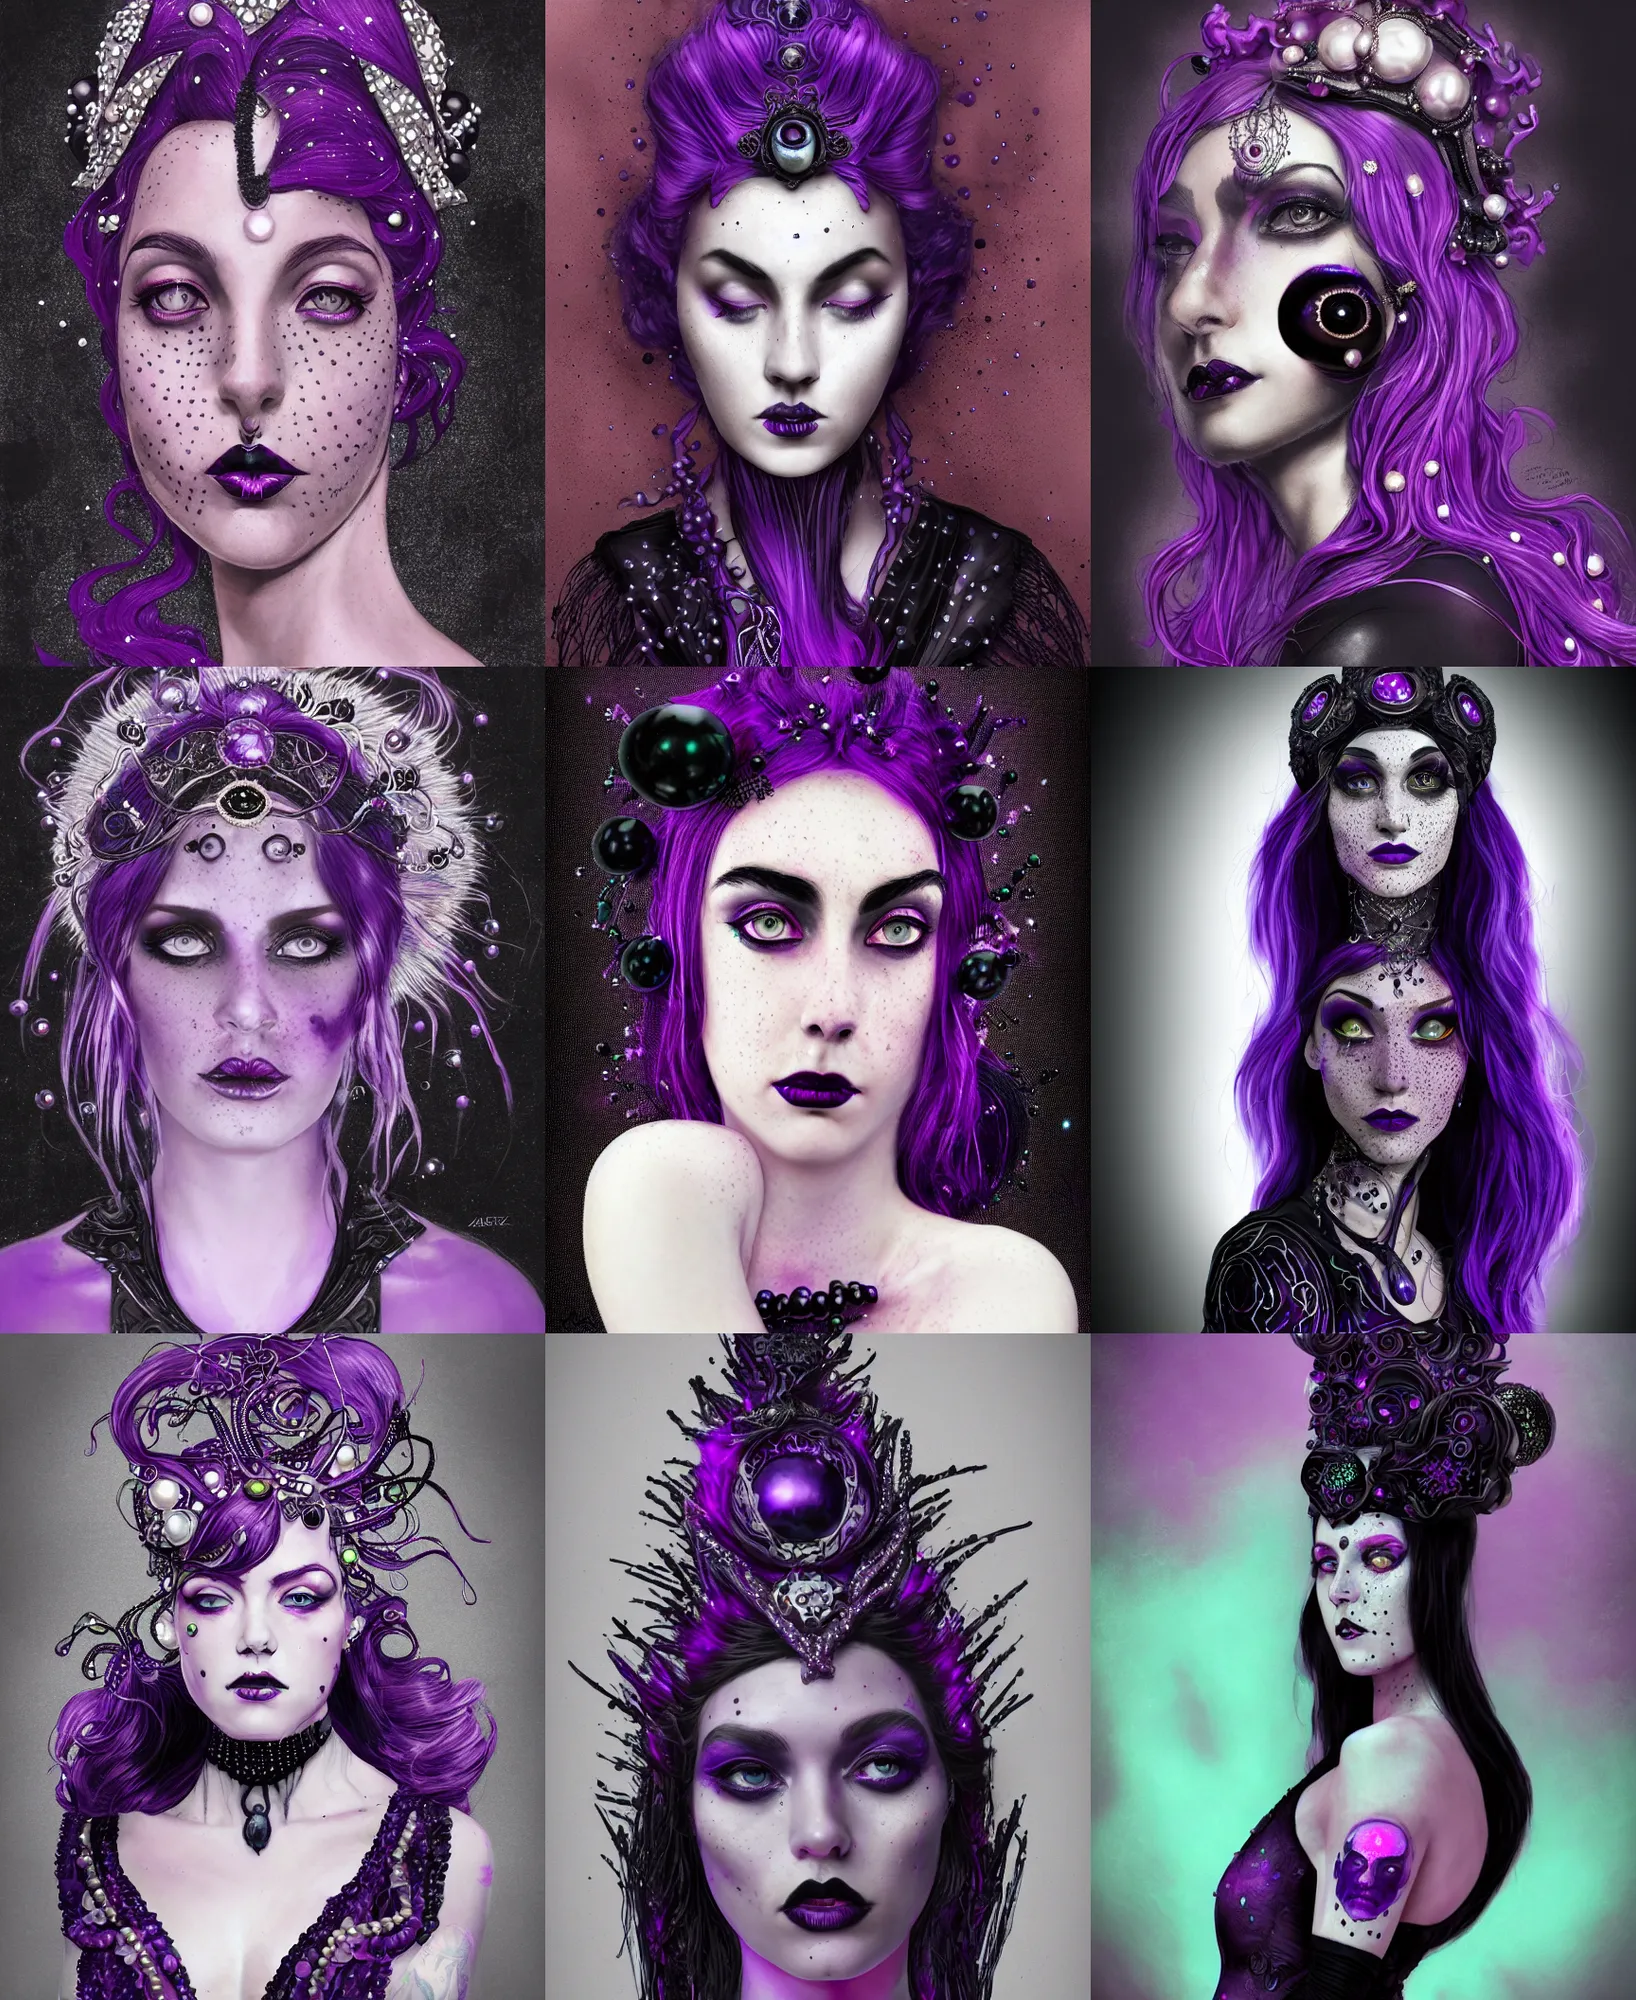 Prompt: Purple girl with purple hair in black dress, black art nouveau style headdress, black pearls, black gems, glowing eyes, light freckles, portrait, biomech, concept art, medium shot, unreal, octane, symmetrical, photorealism